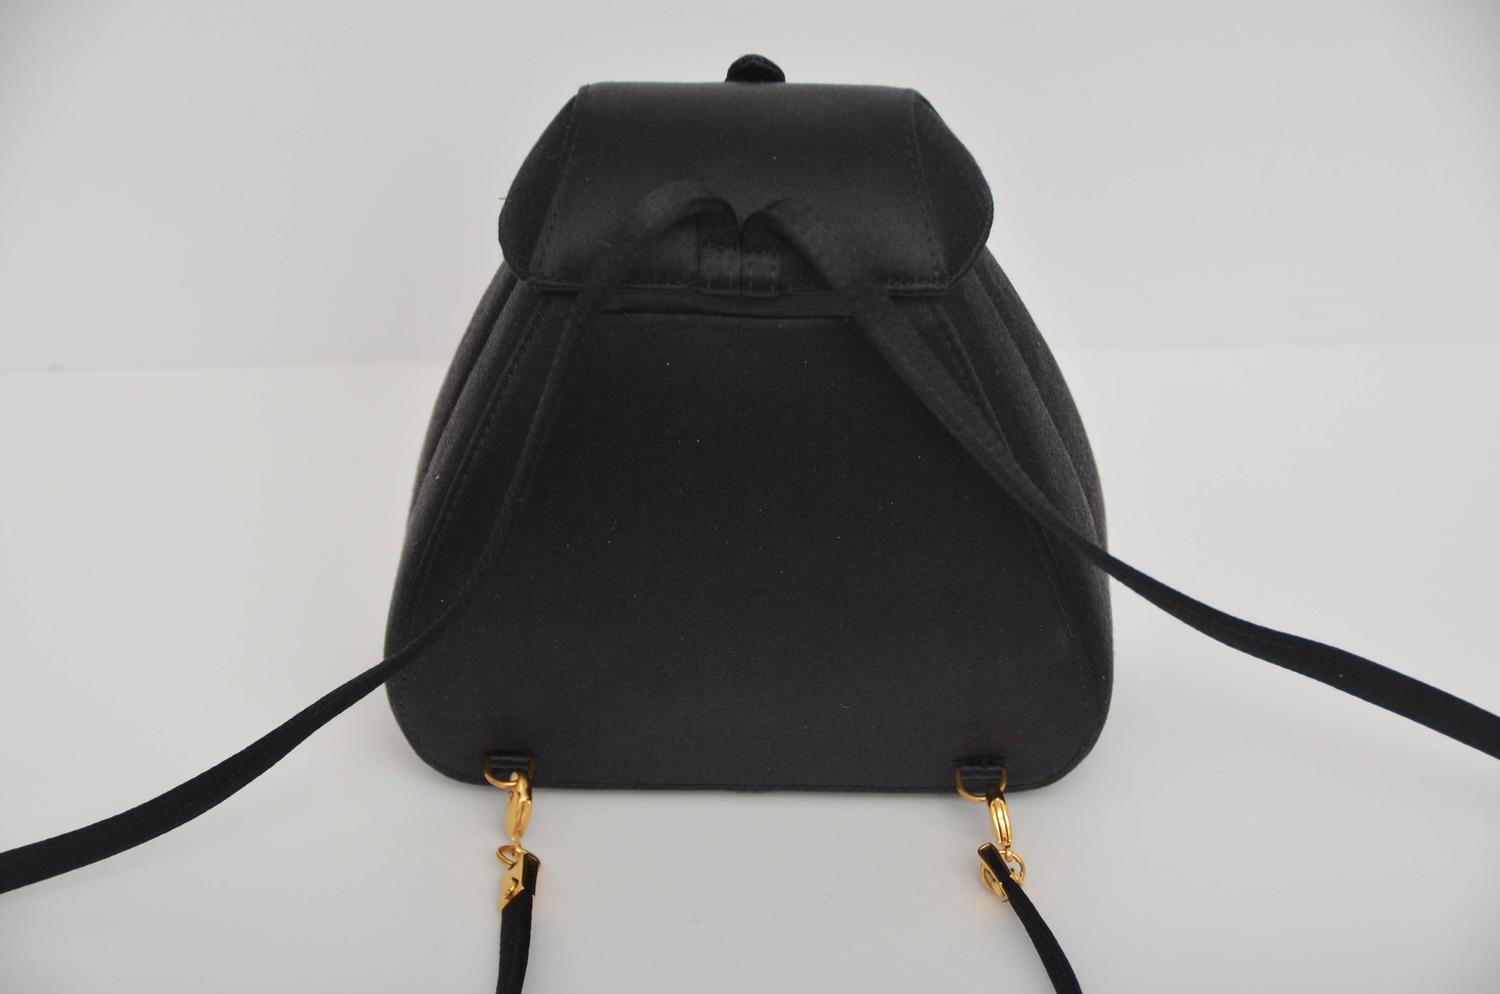 Gucci Super Cute And Super Rare Black Satin Mini Backpack Handbag Mint For Sale at 1stdibs